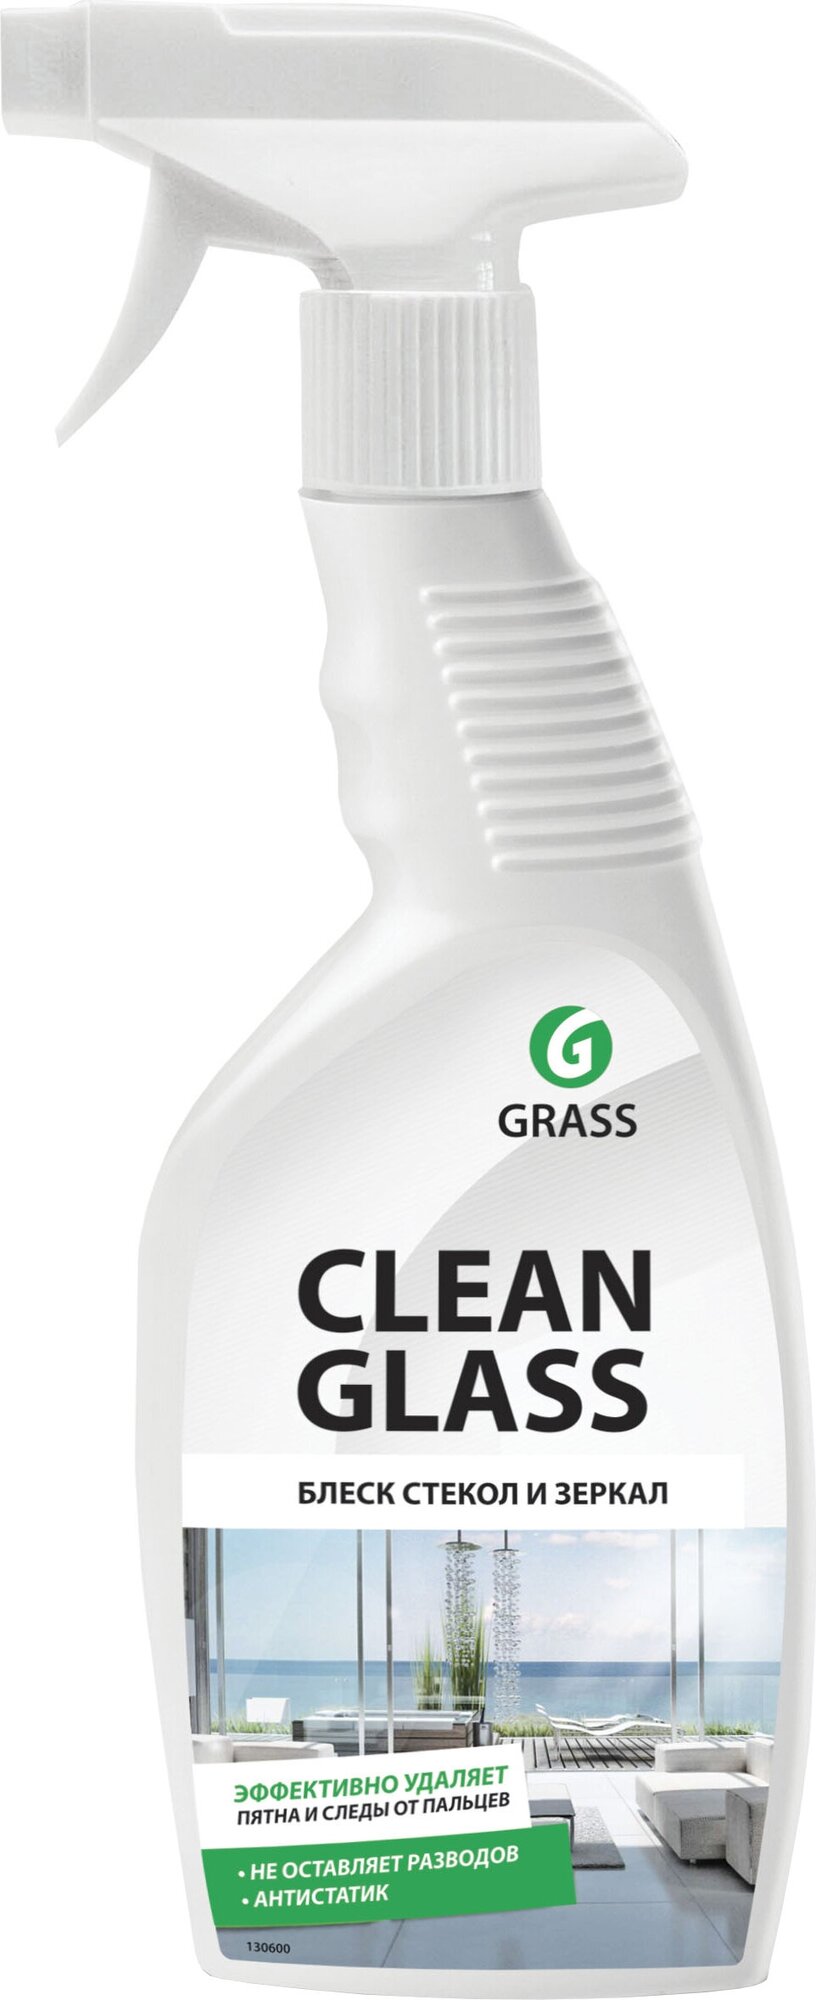 Спрей Grass Clean glass супер блеск для мытья окон и зеркал, 600 мл - фотография № 16